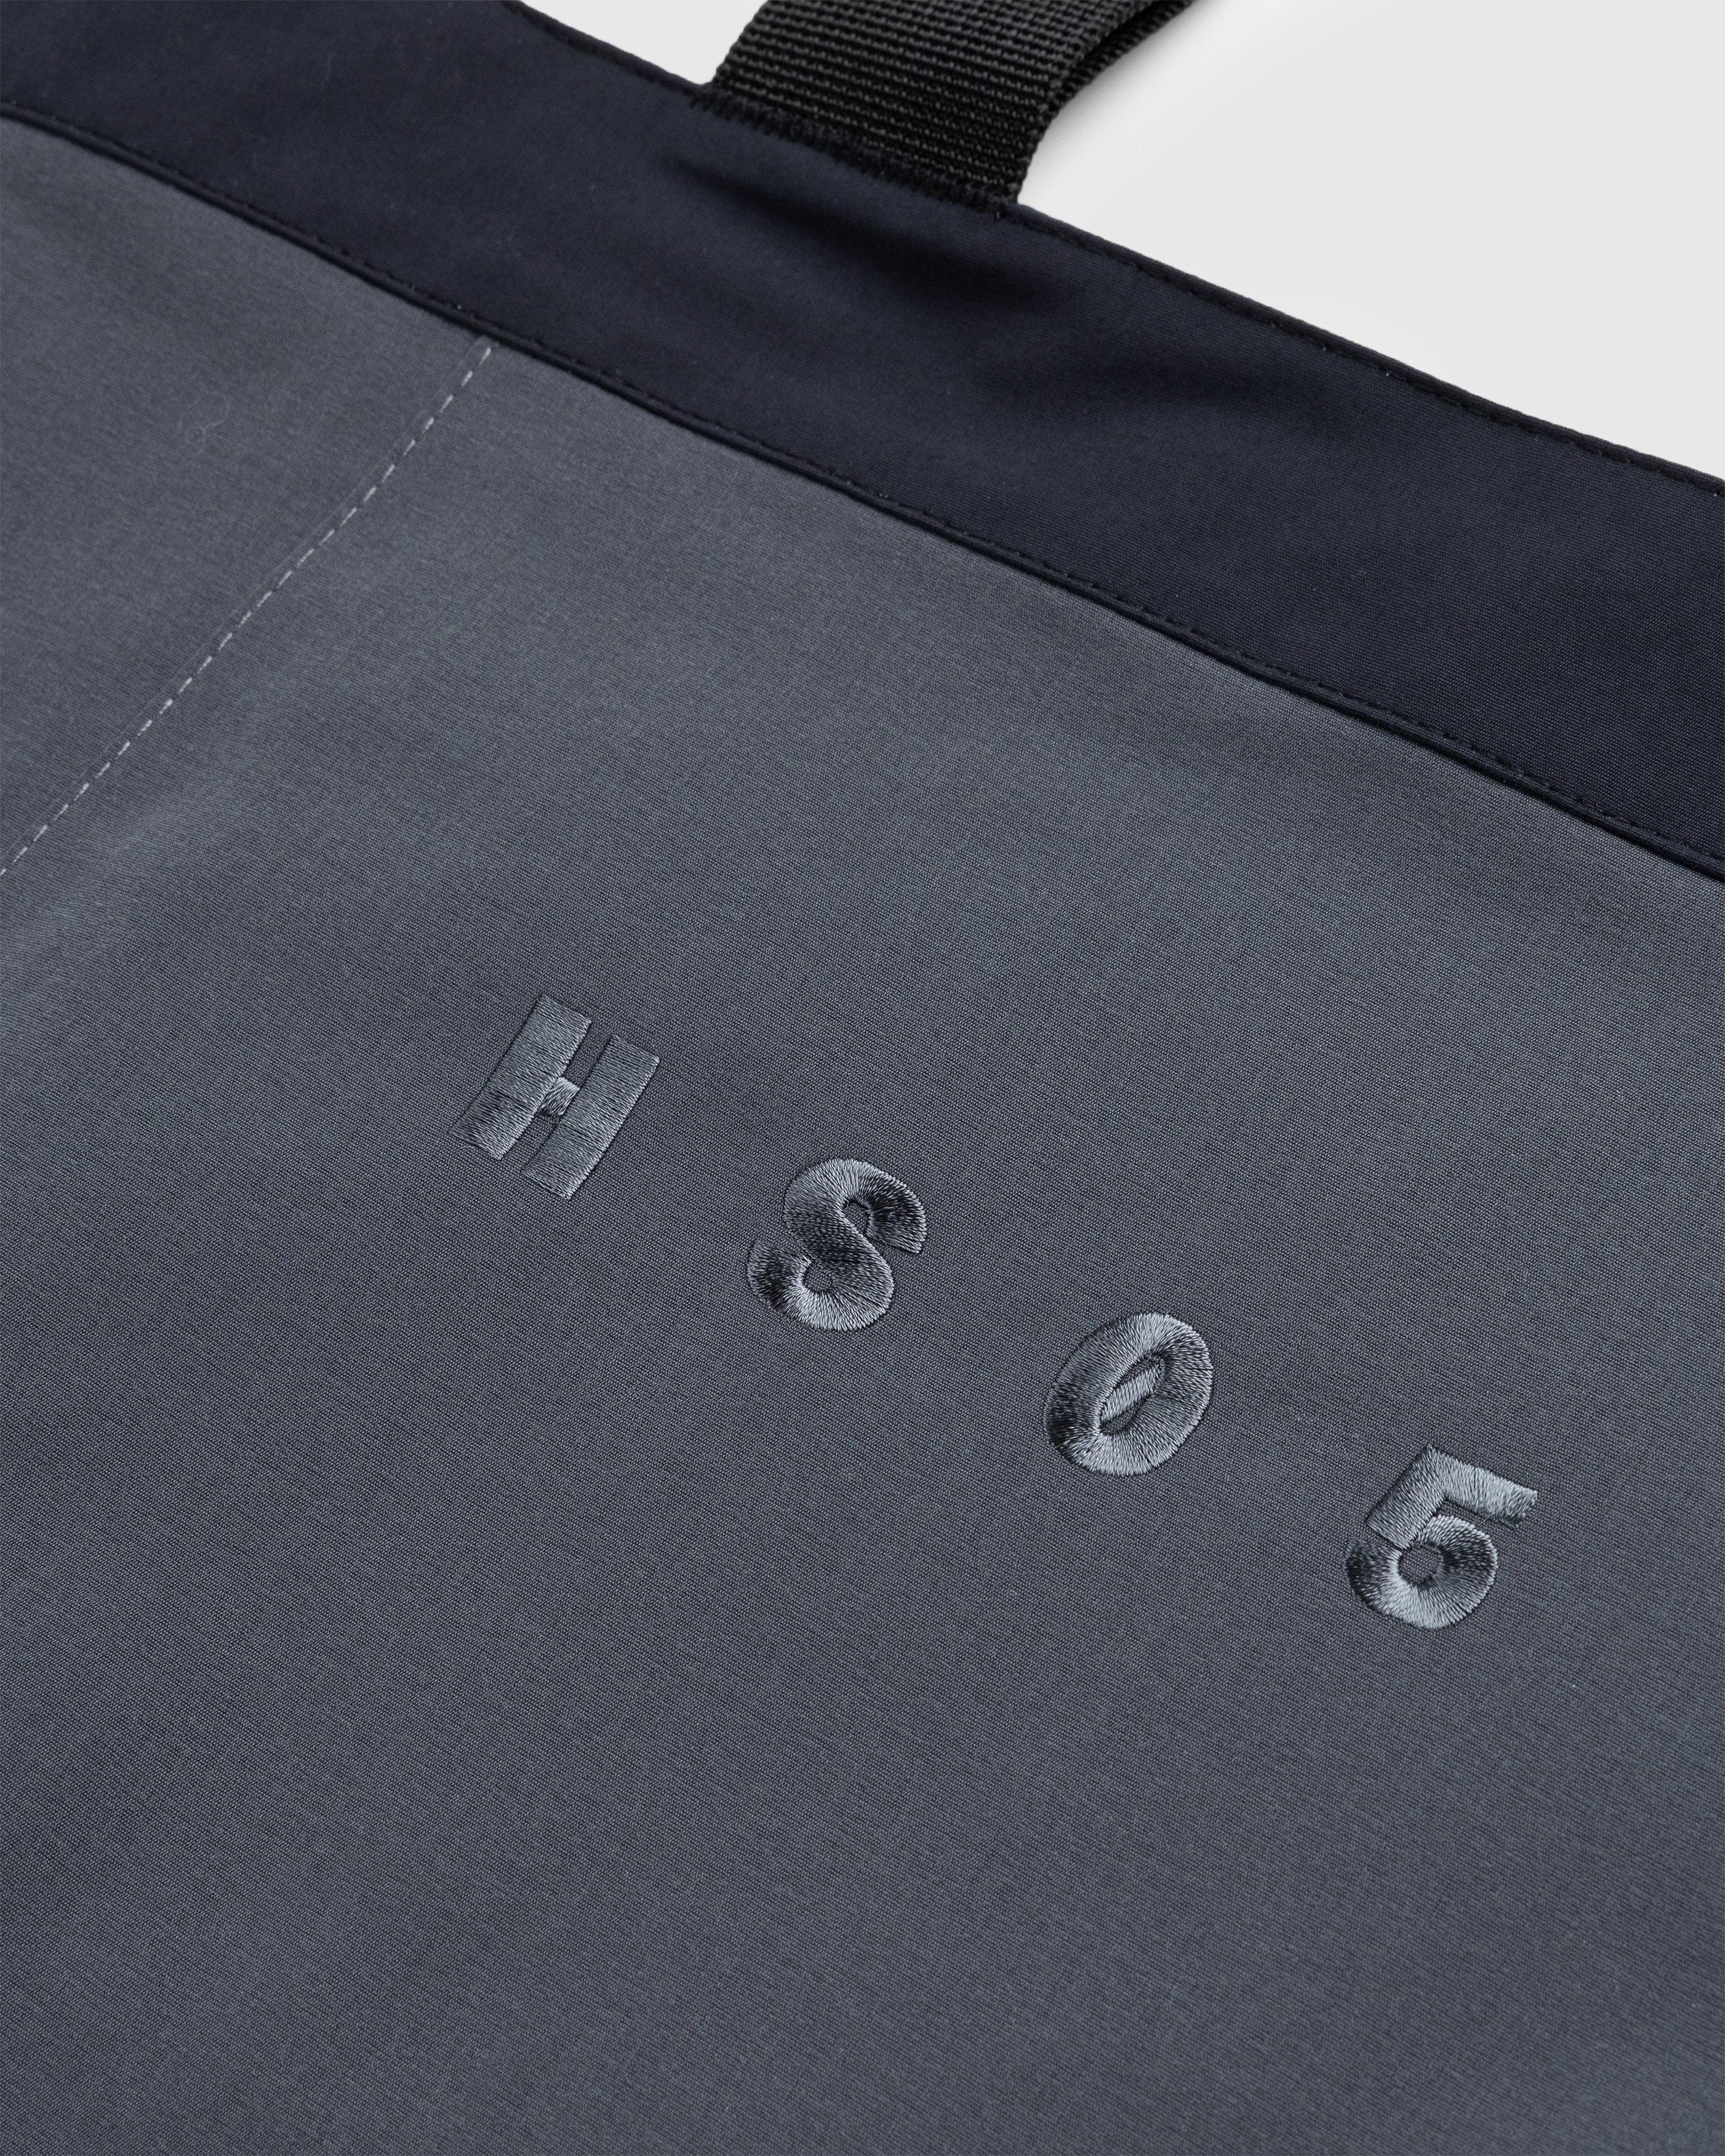 Highsnobiety HS05 - 3-Layer Nylon Tote Bag Black - Accessories - Black - Image 5